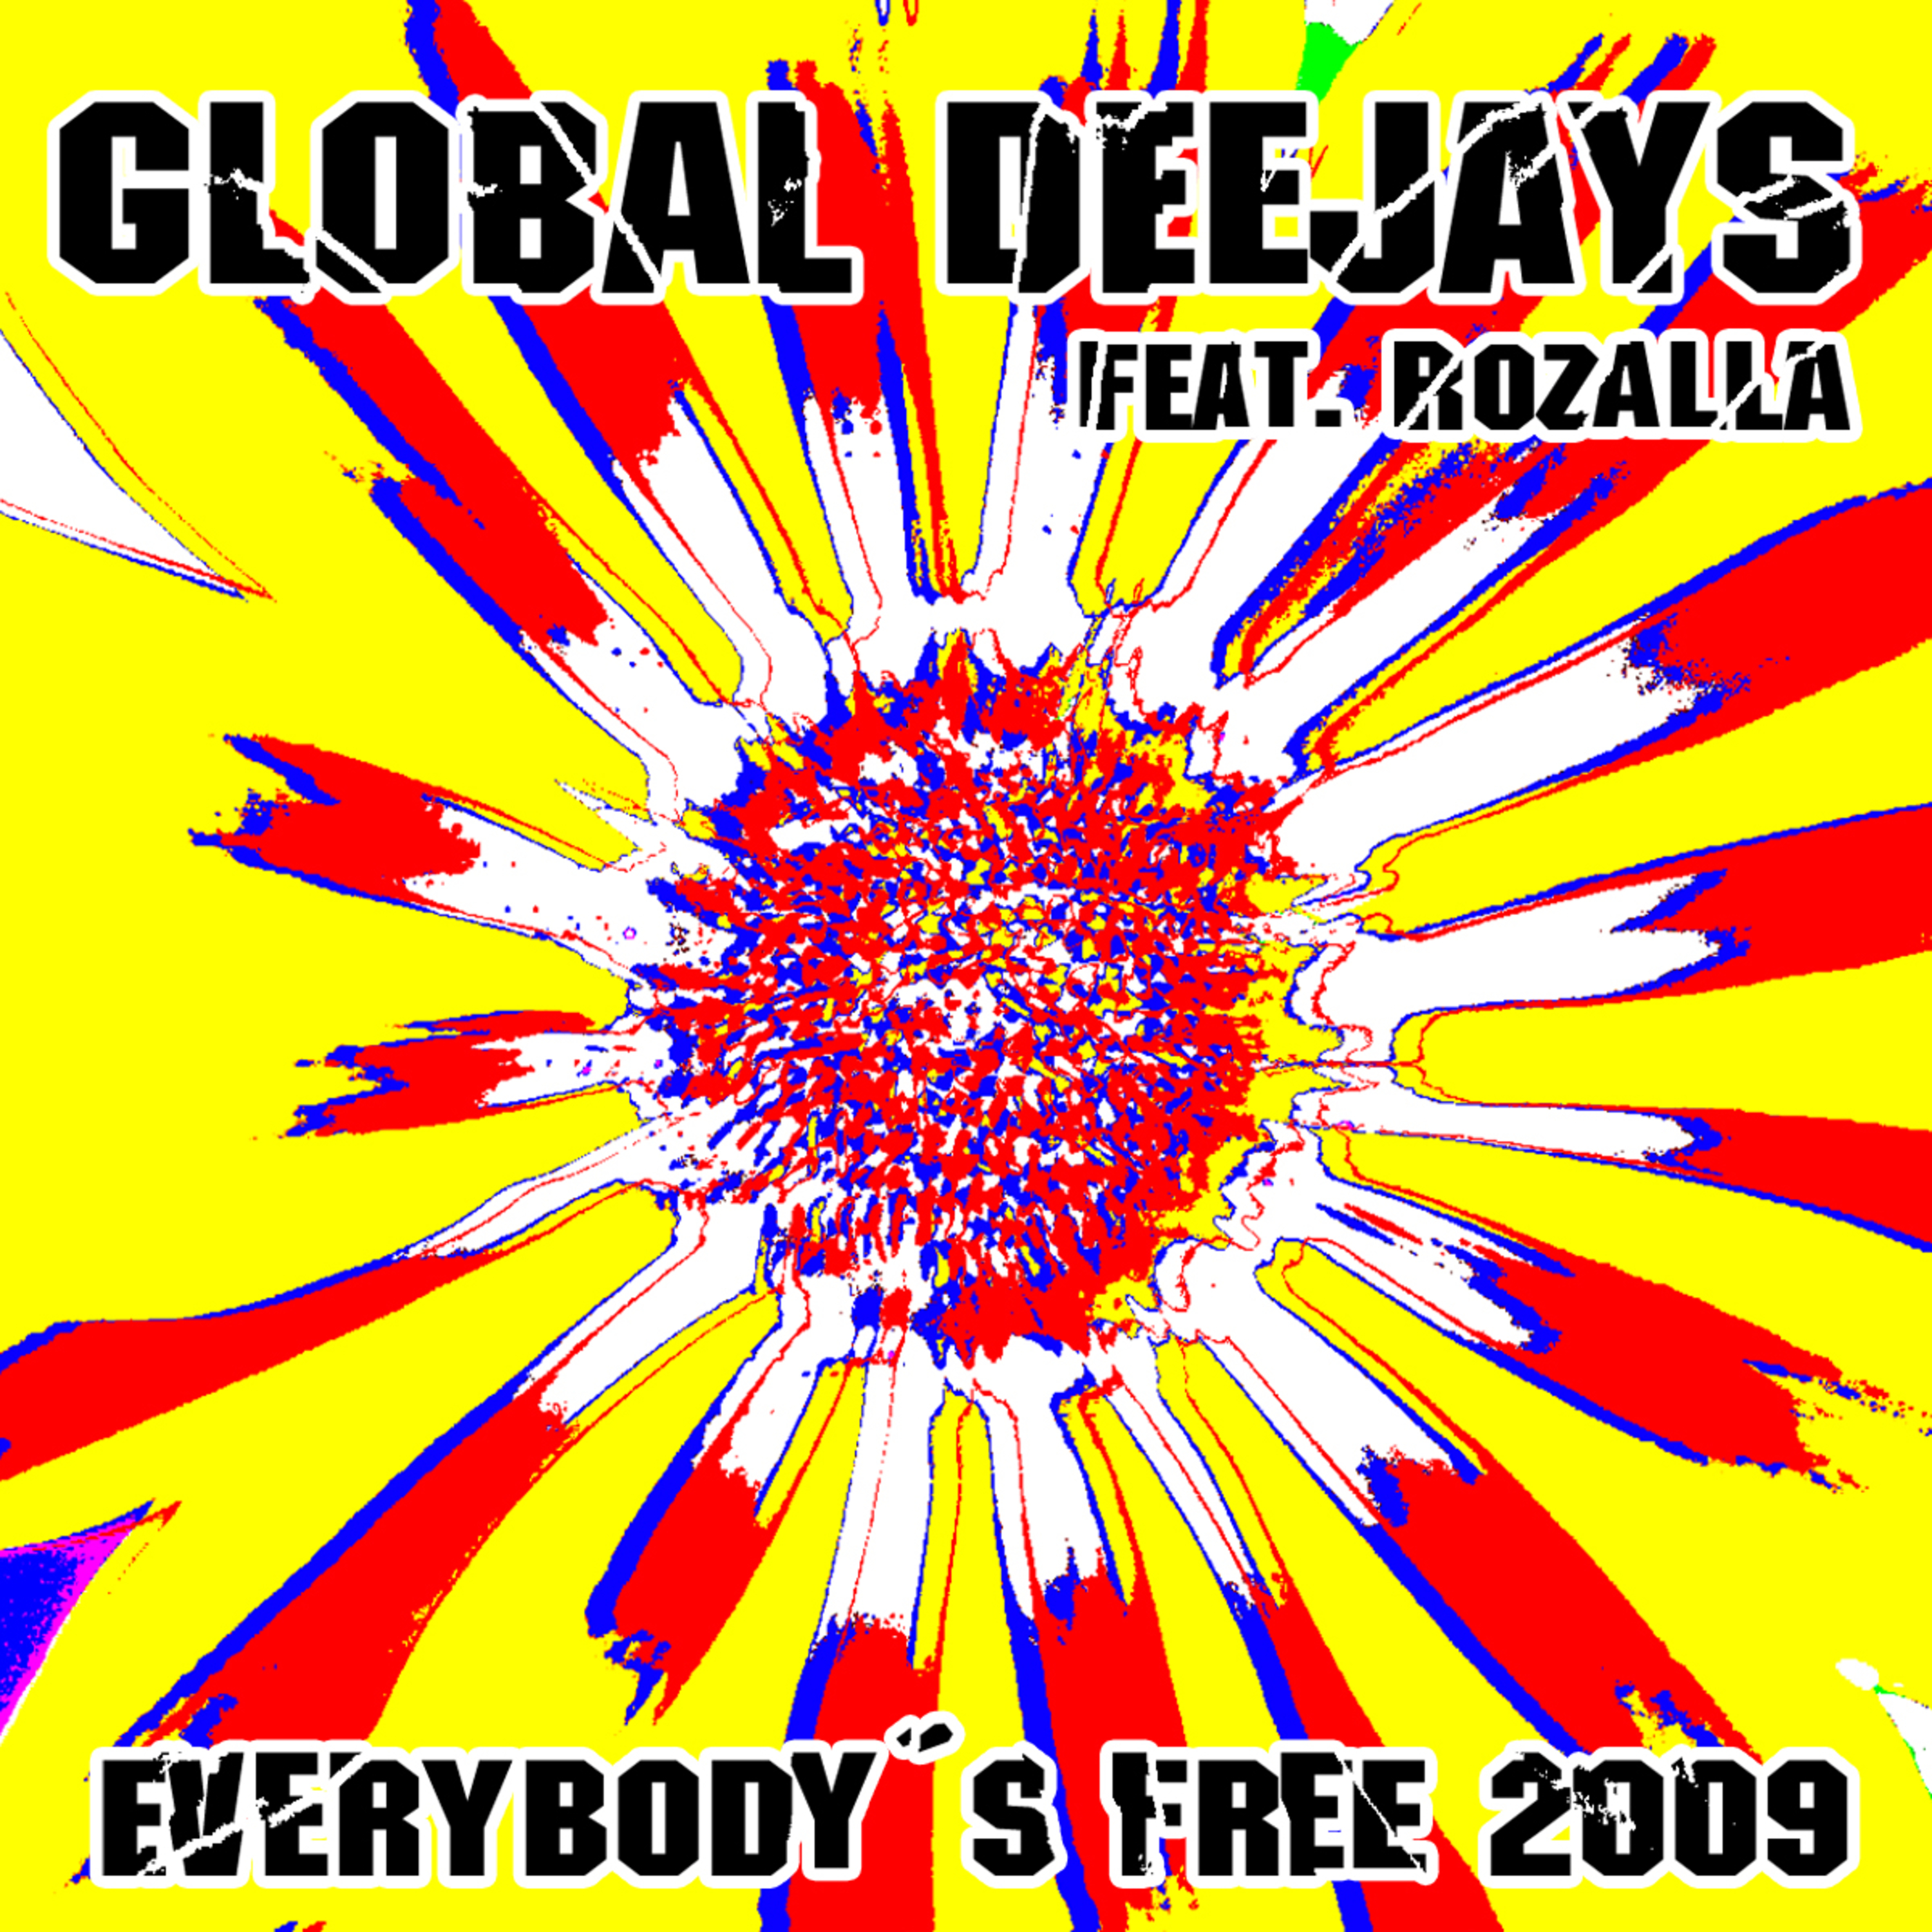 Everybody's Free (2009 Rework) (2009 Club Mix)